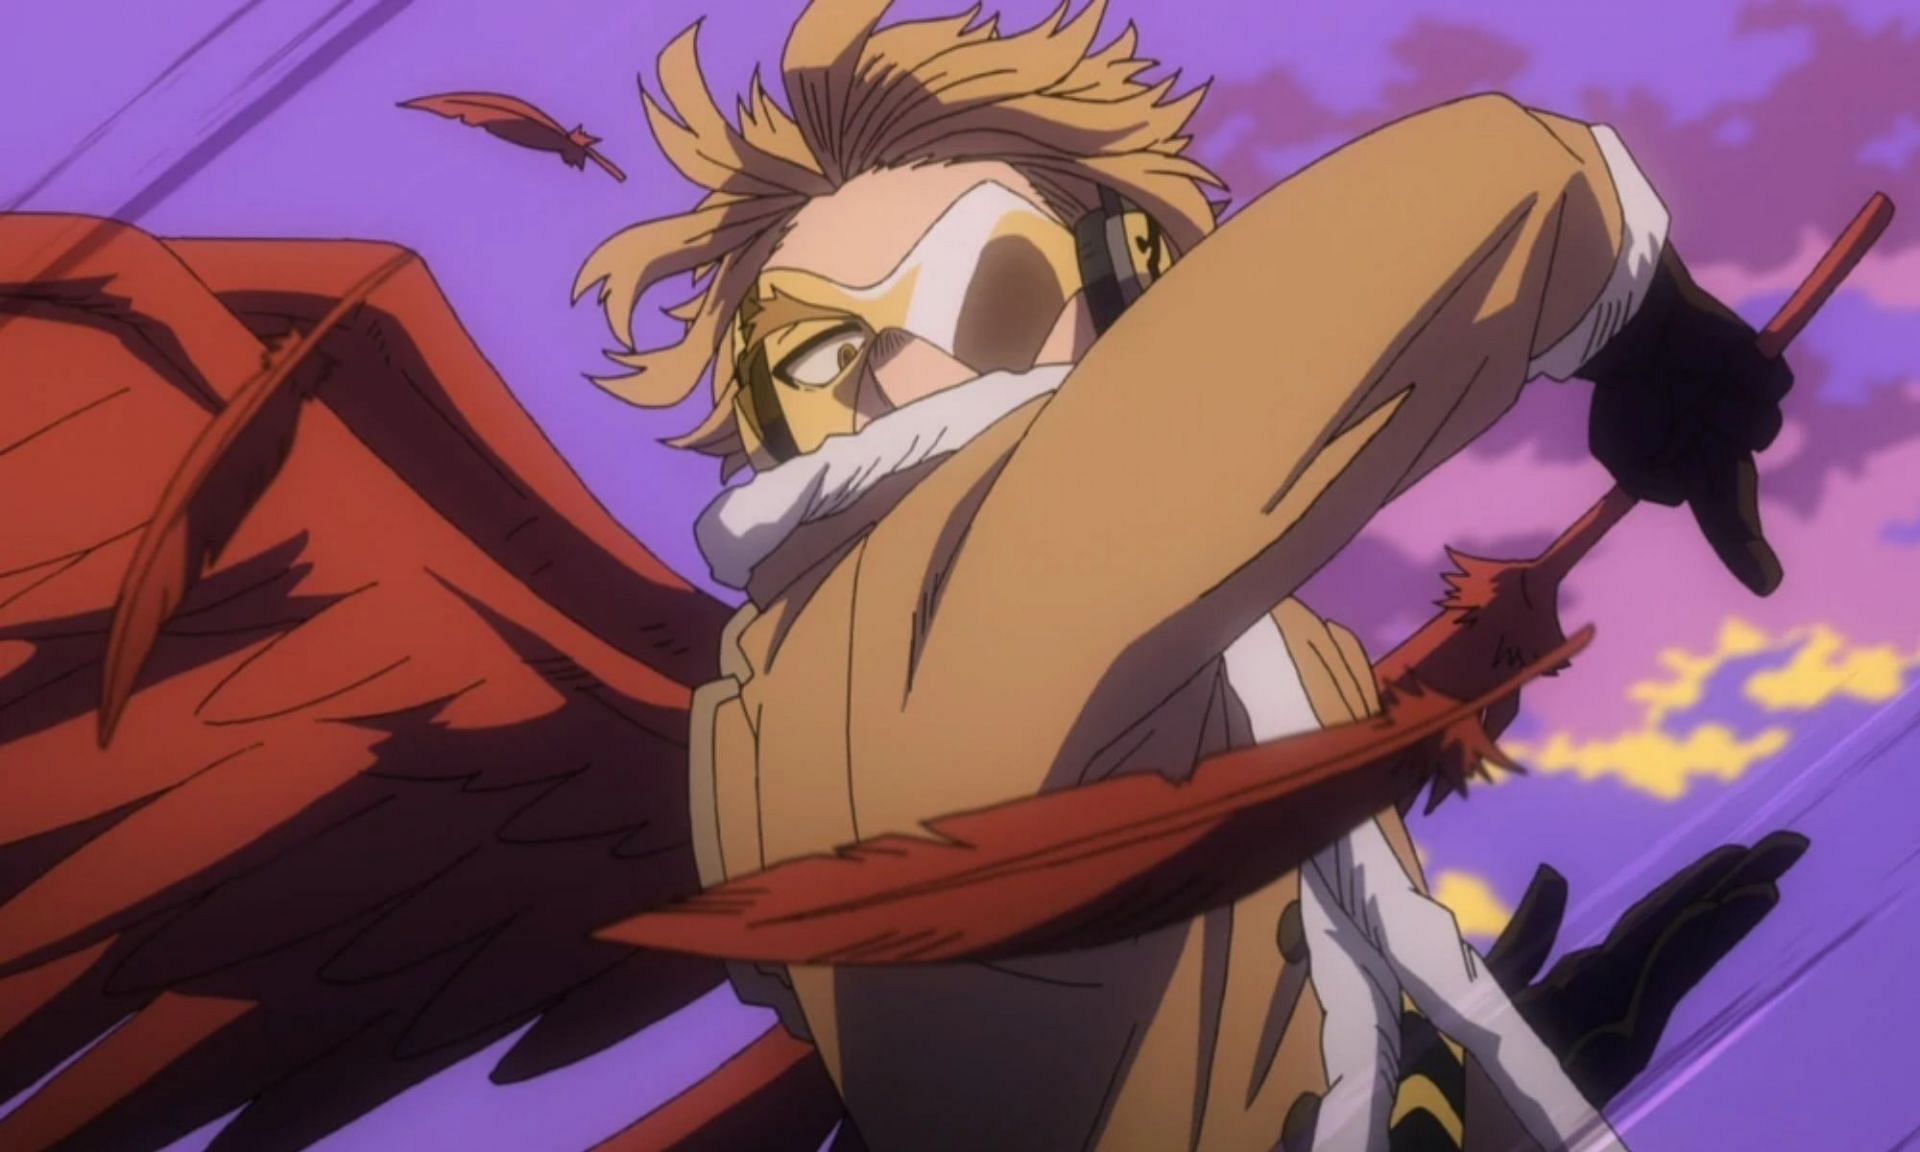 Unleash Your Powers in My Hero Academia: The Strongest Hero! - Anime Expo